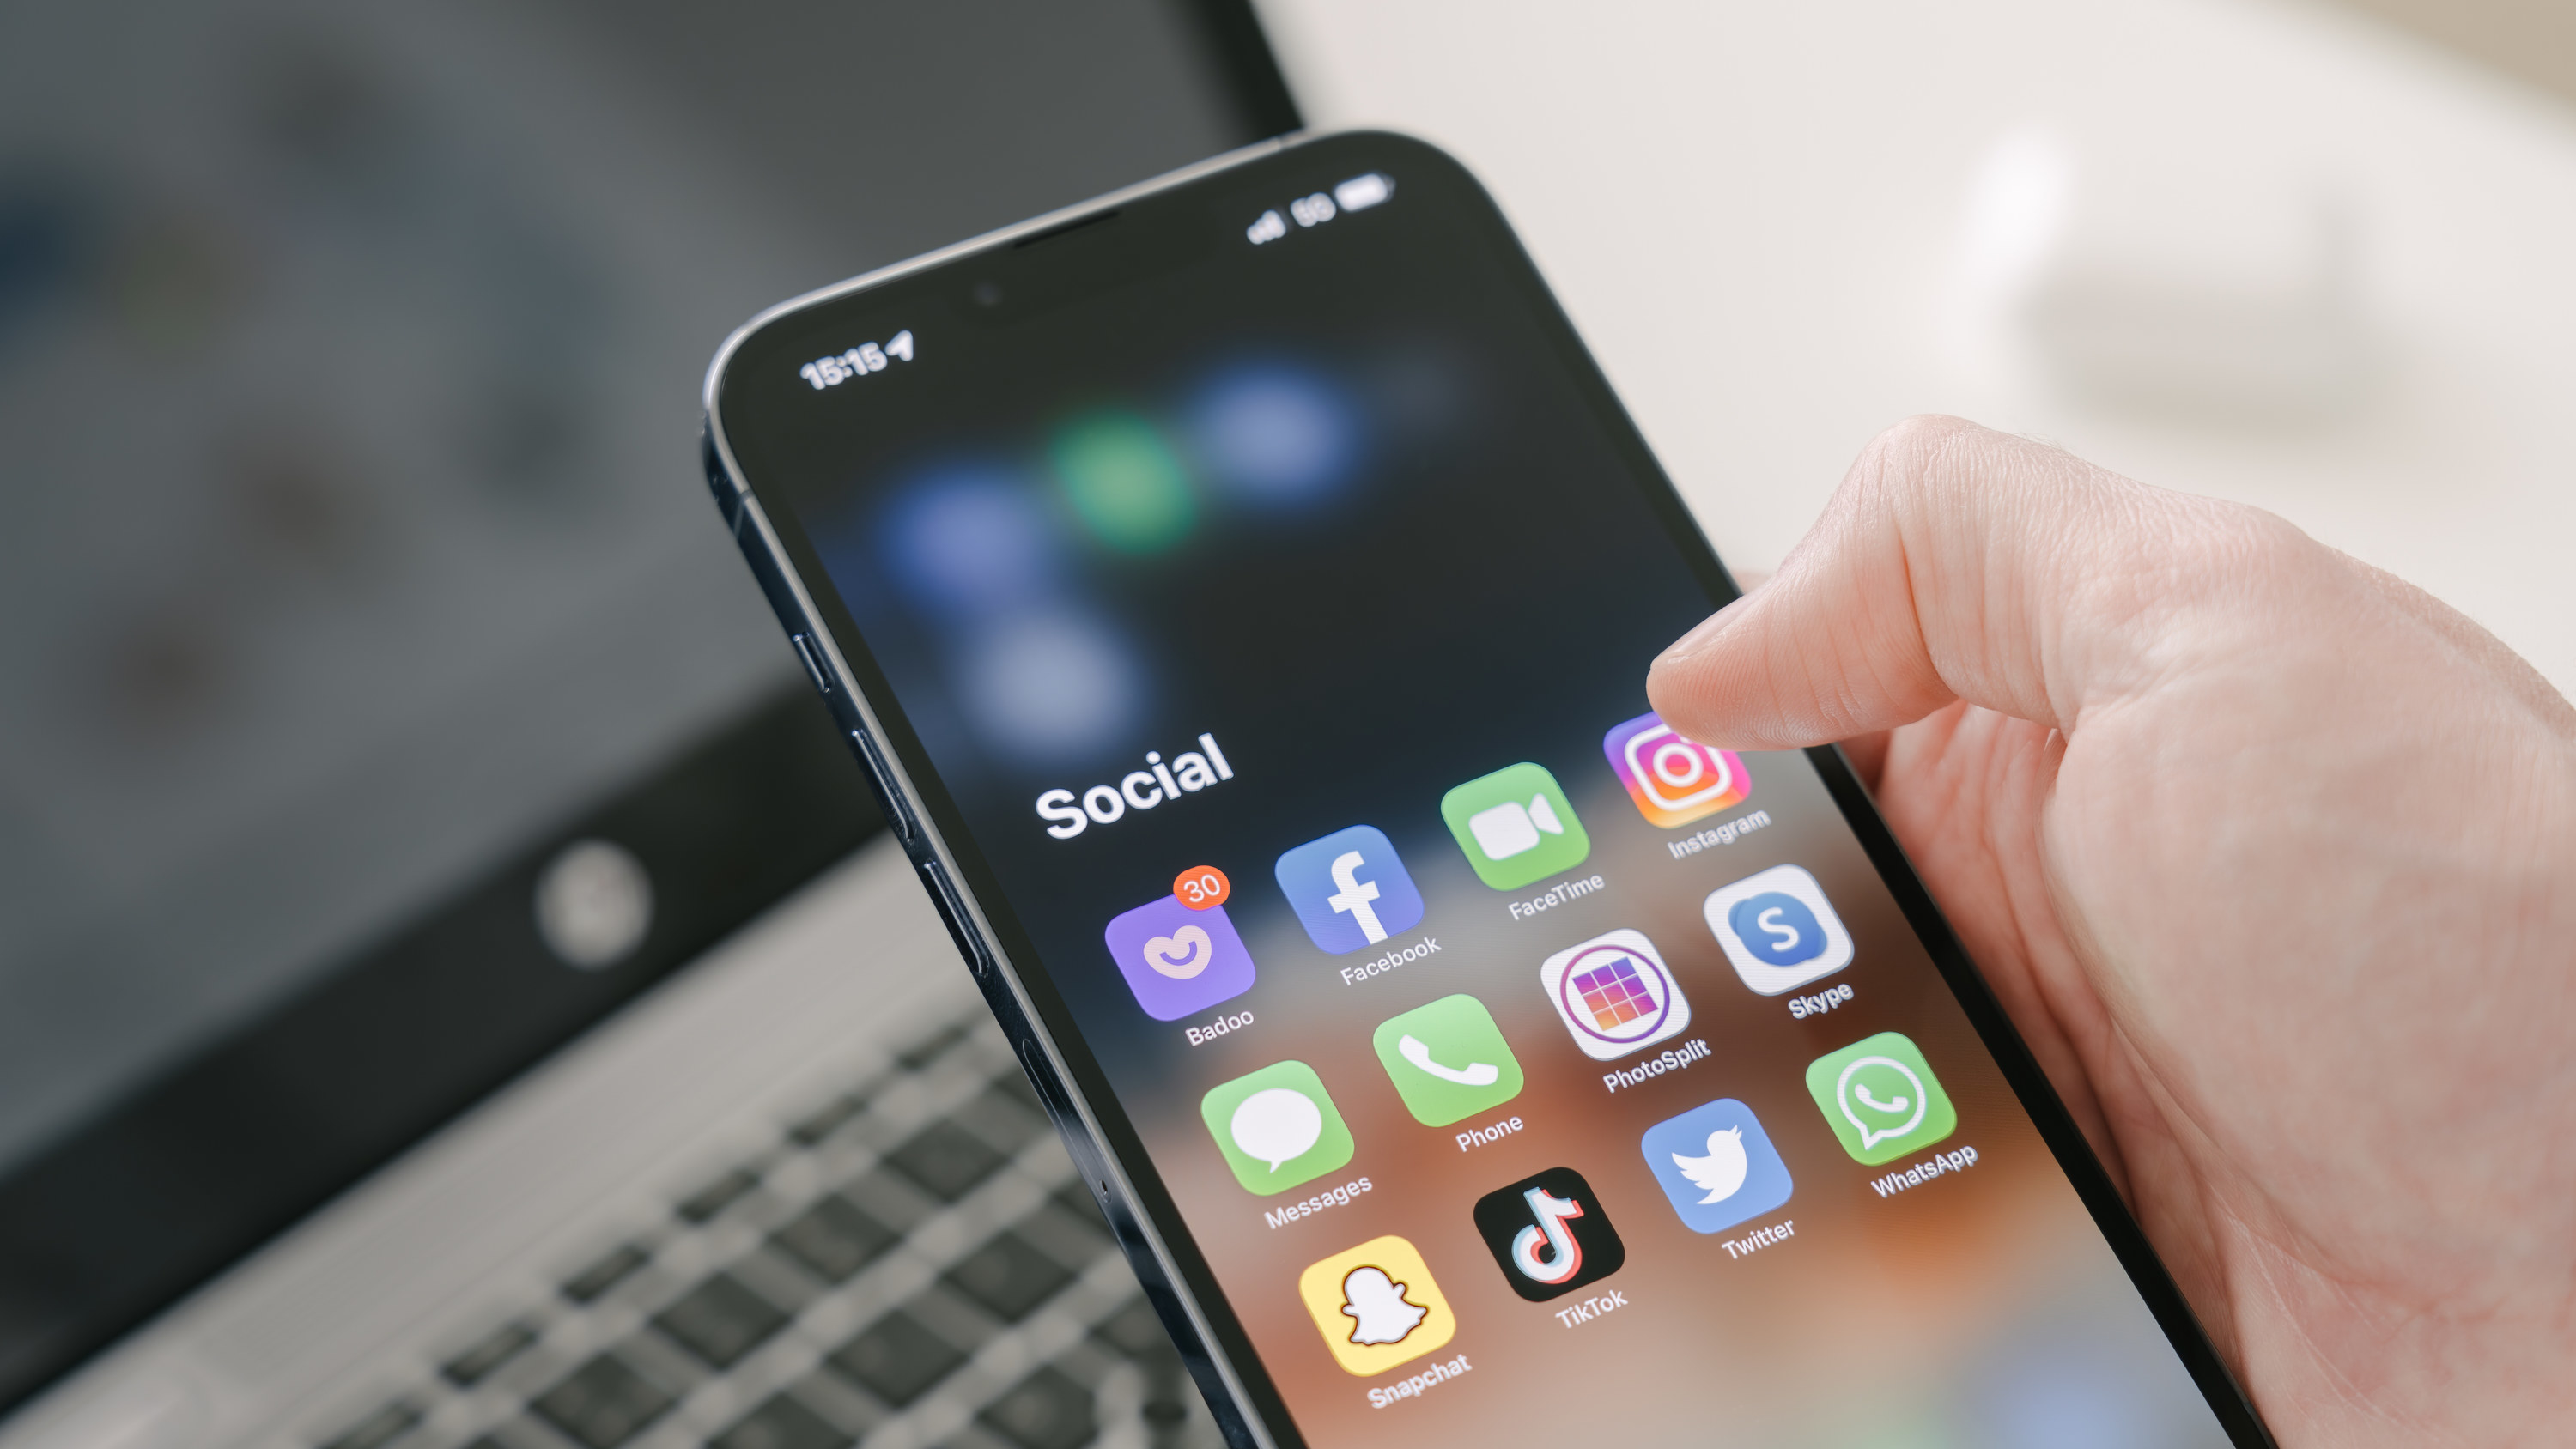 social media apps on a smartphone